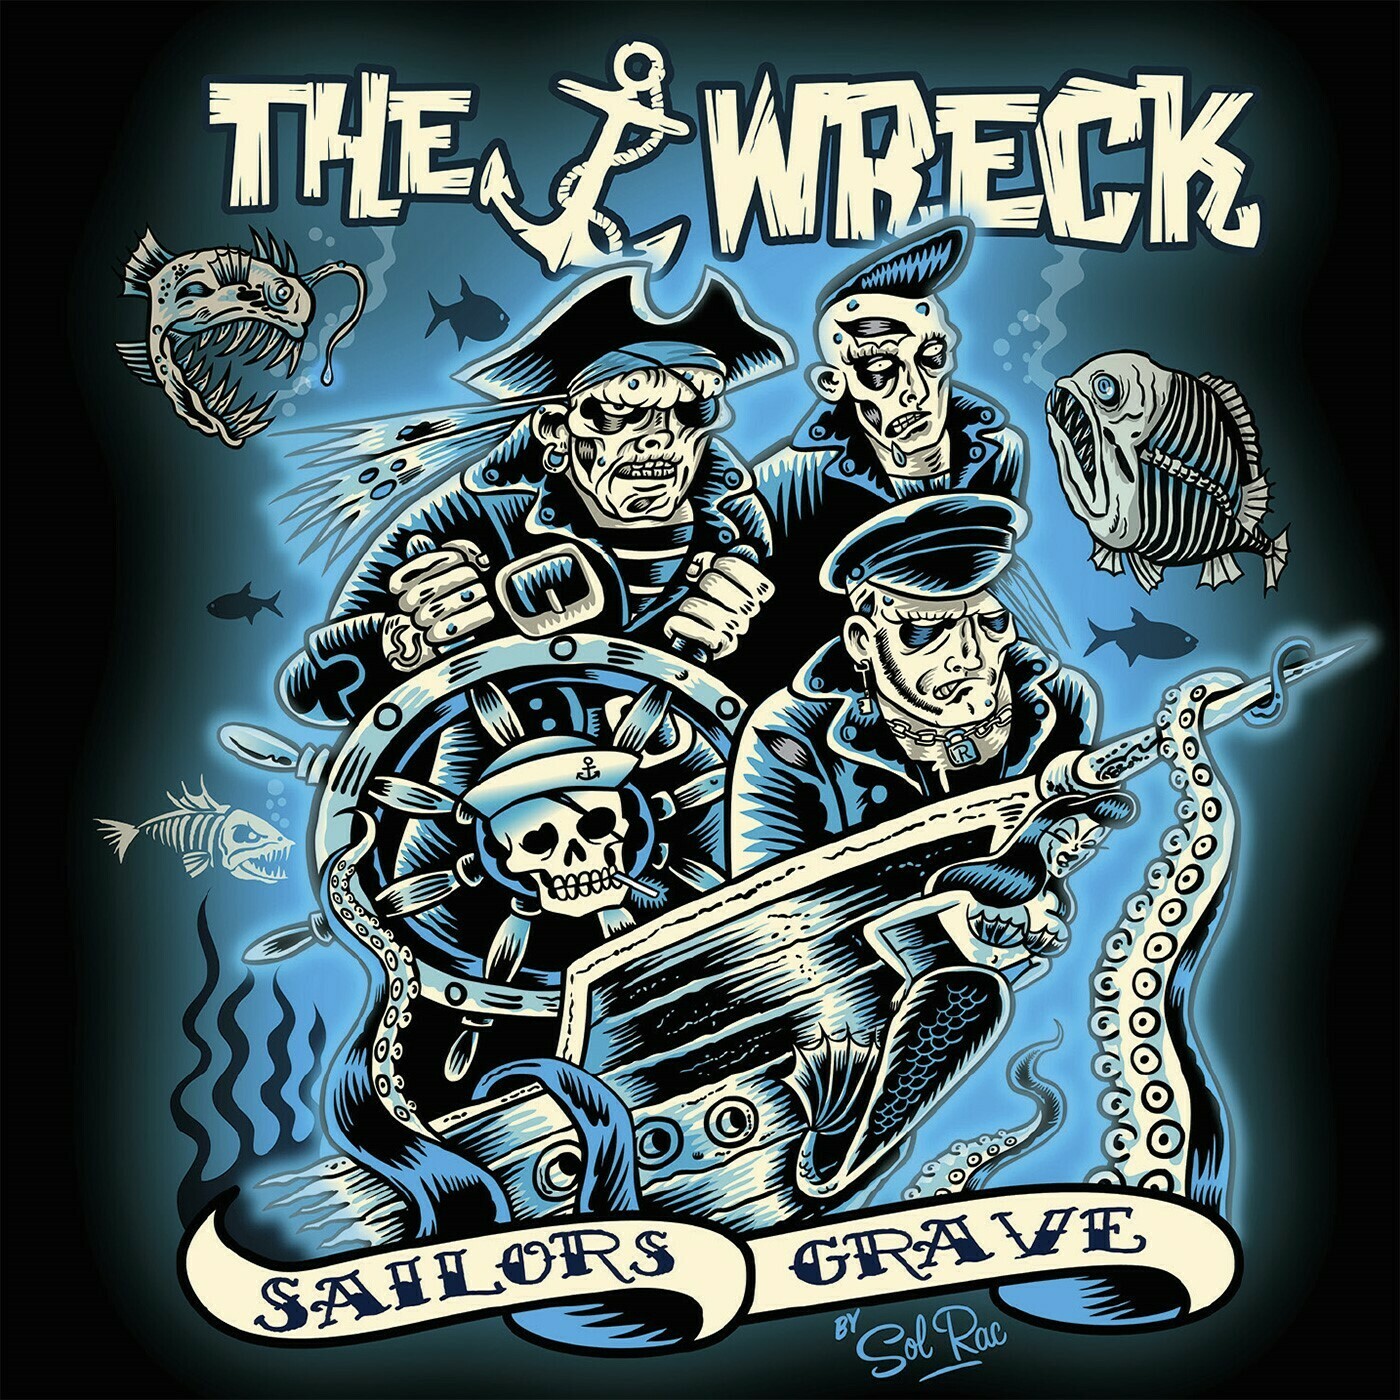 THE WRECK - "Sailors Grave"